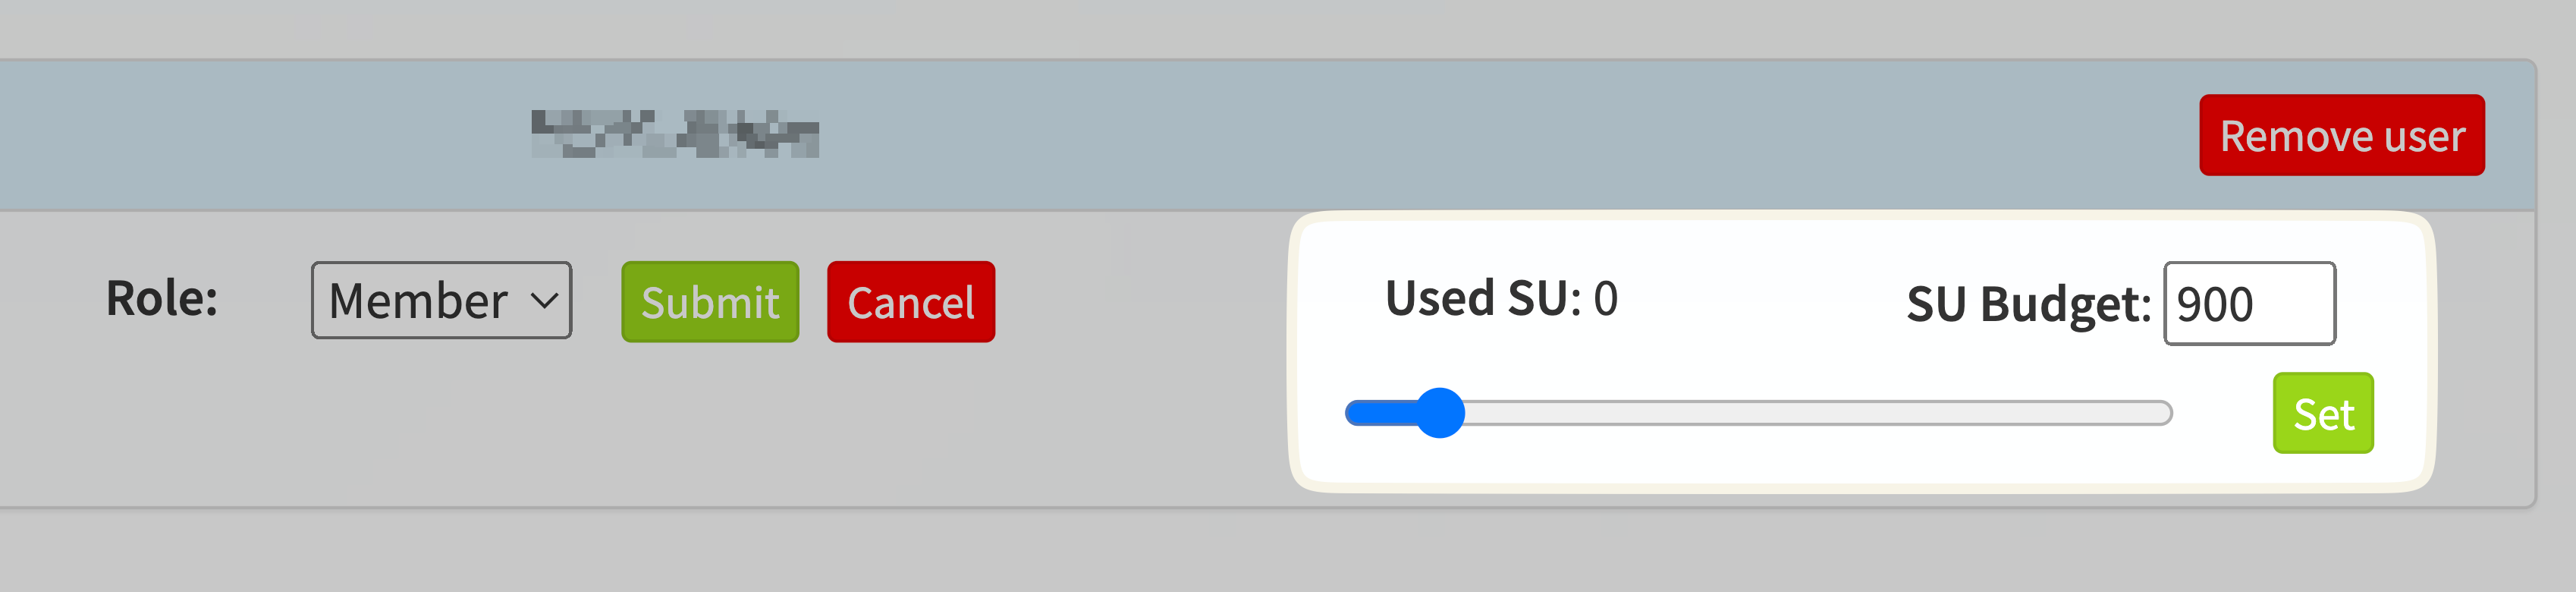 Adjust SU budget for user